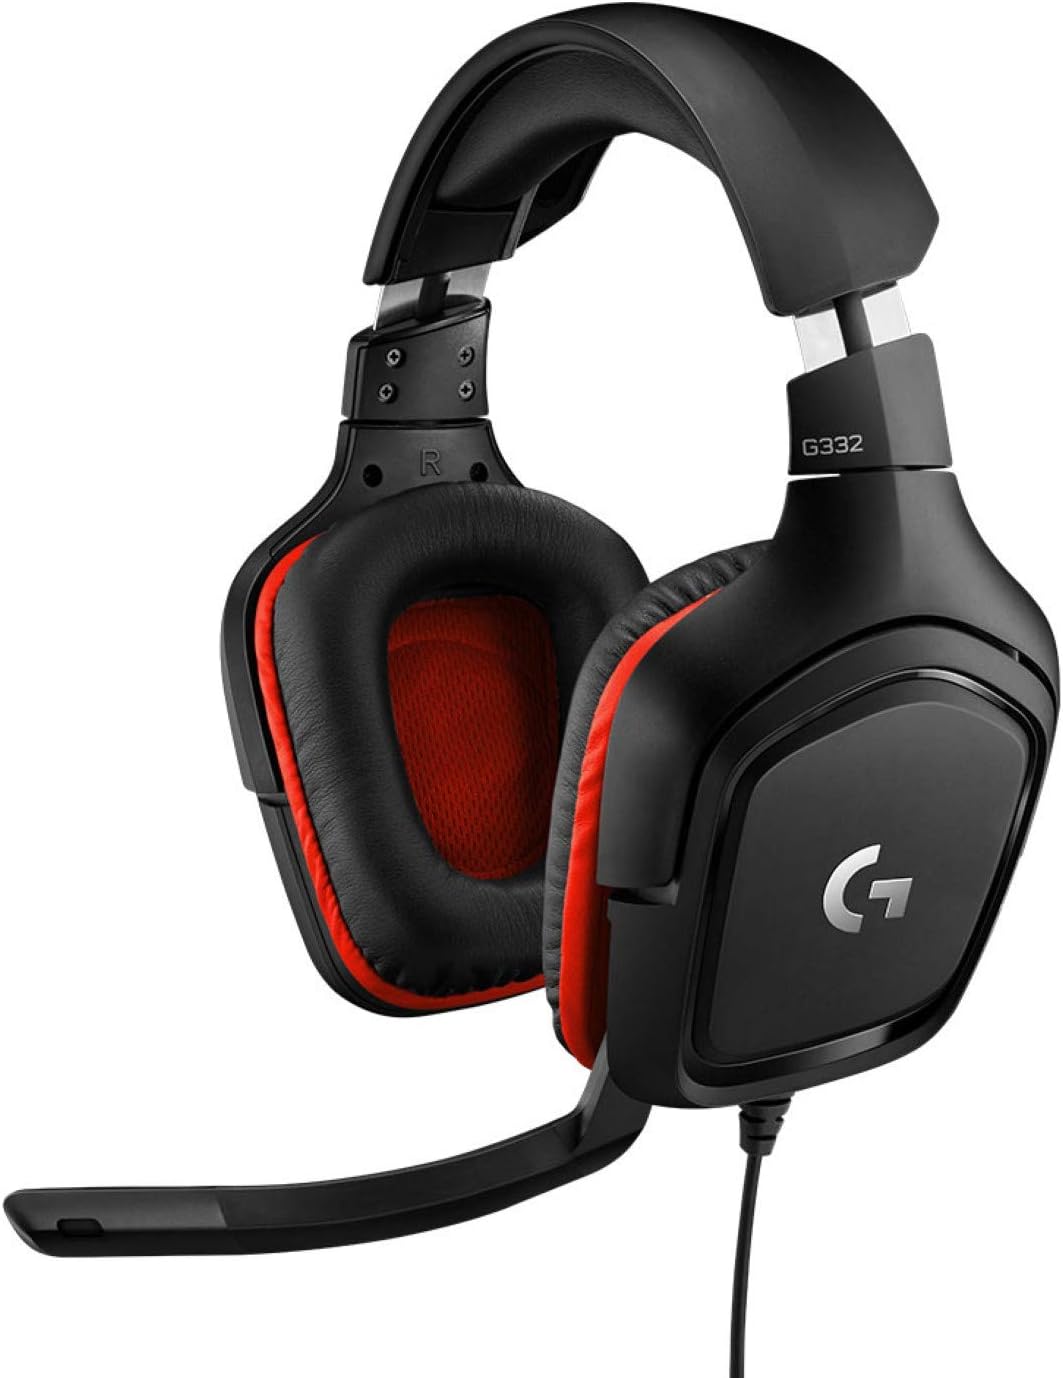 Logitech G332 Wired Gaming Headset سماعات كيمنك لوجتك